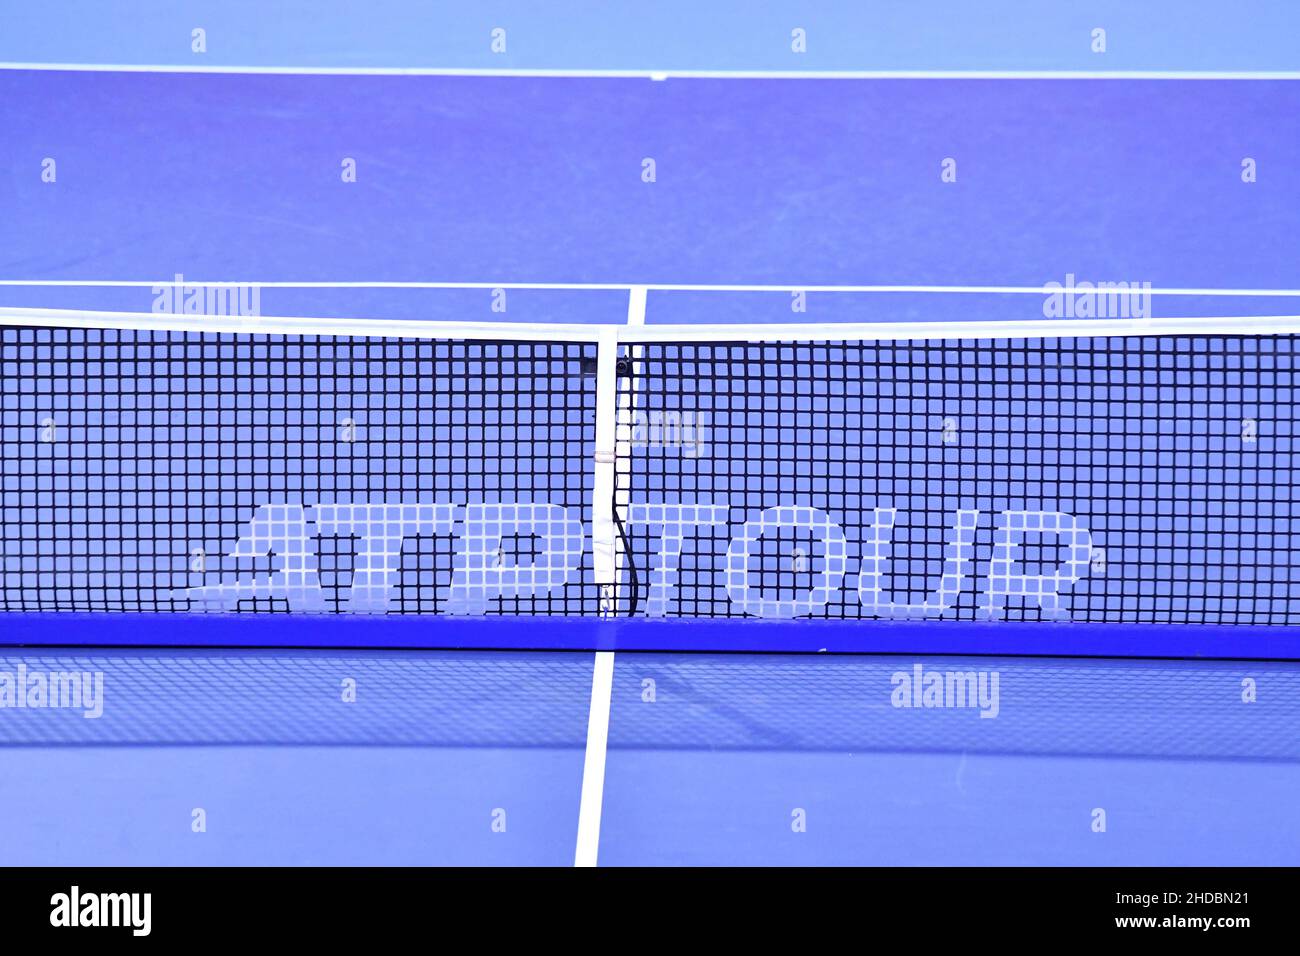 Rete da tennis su superficie blu le finali ATP di prossima generazione, a Milano. Foto Stock